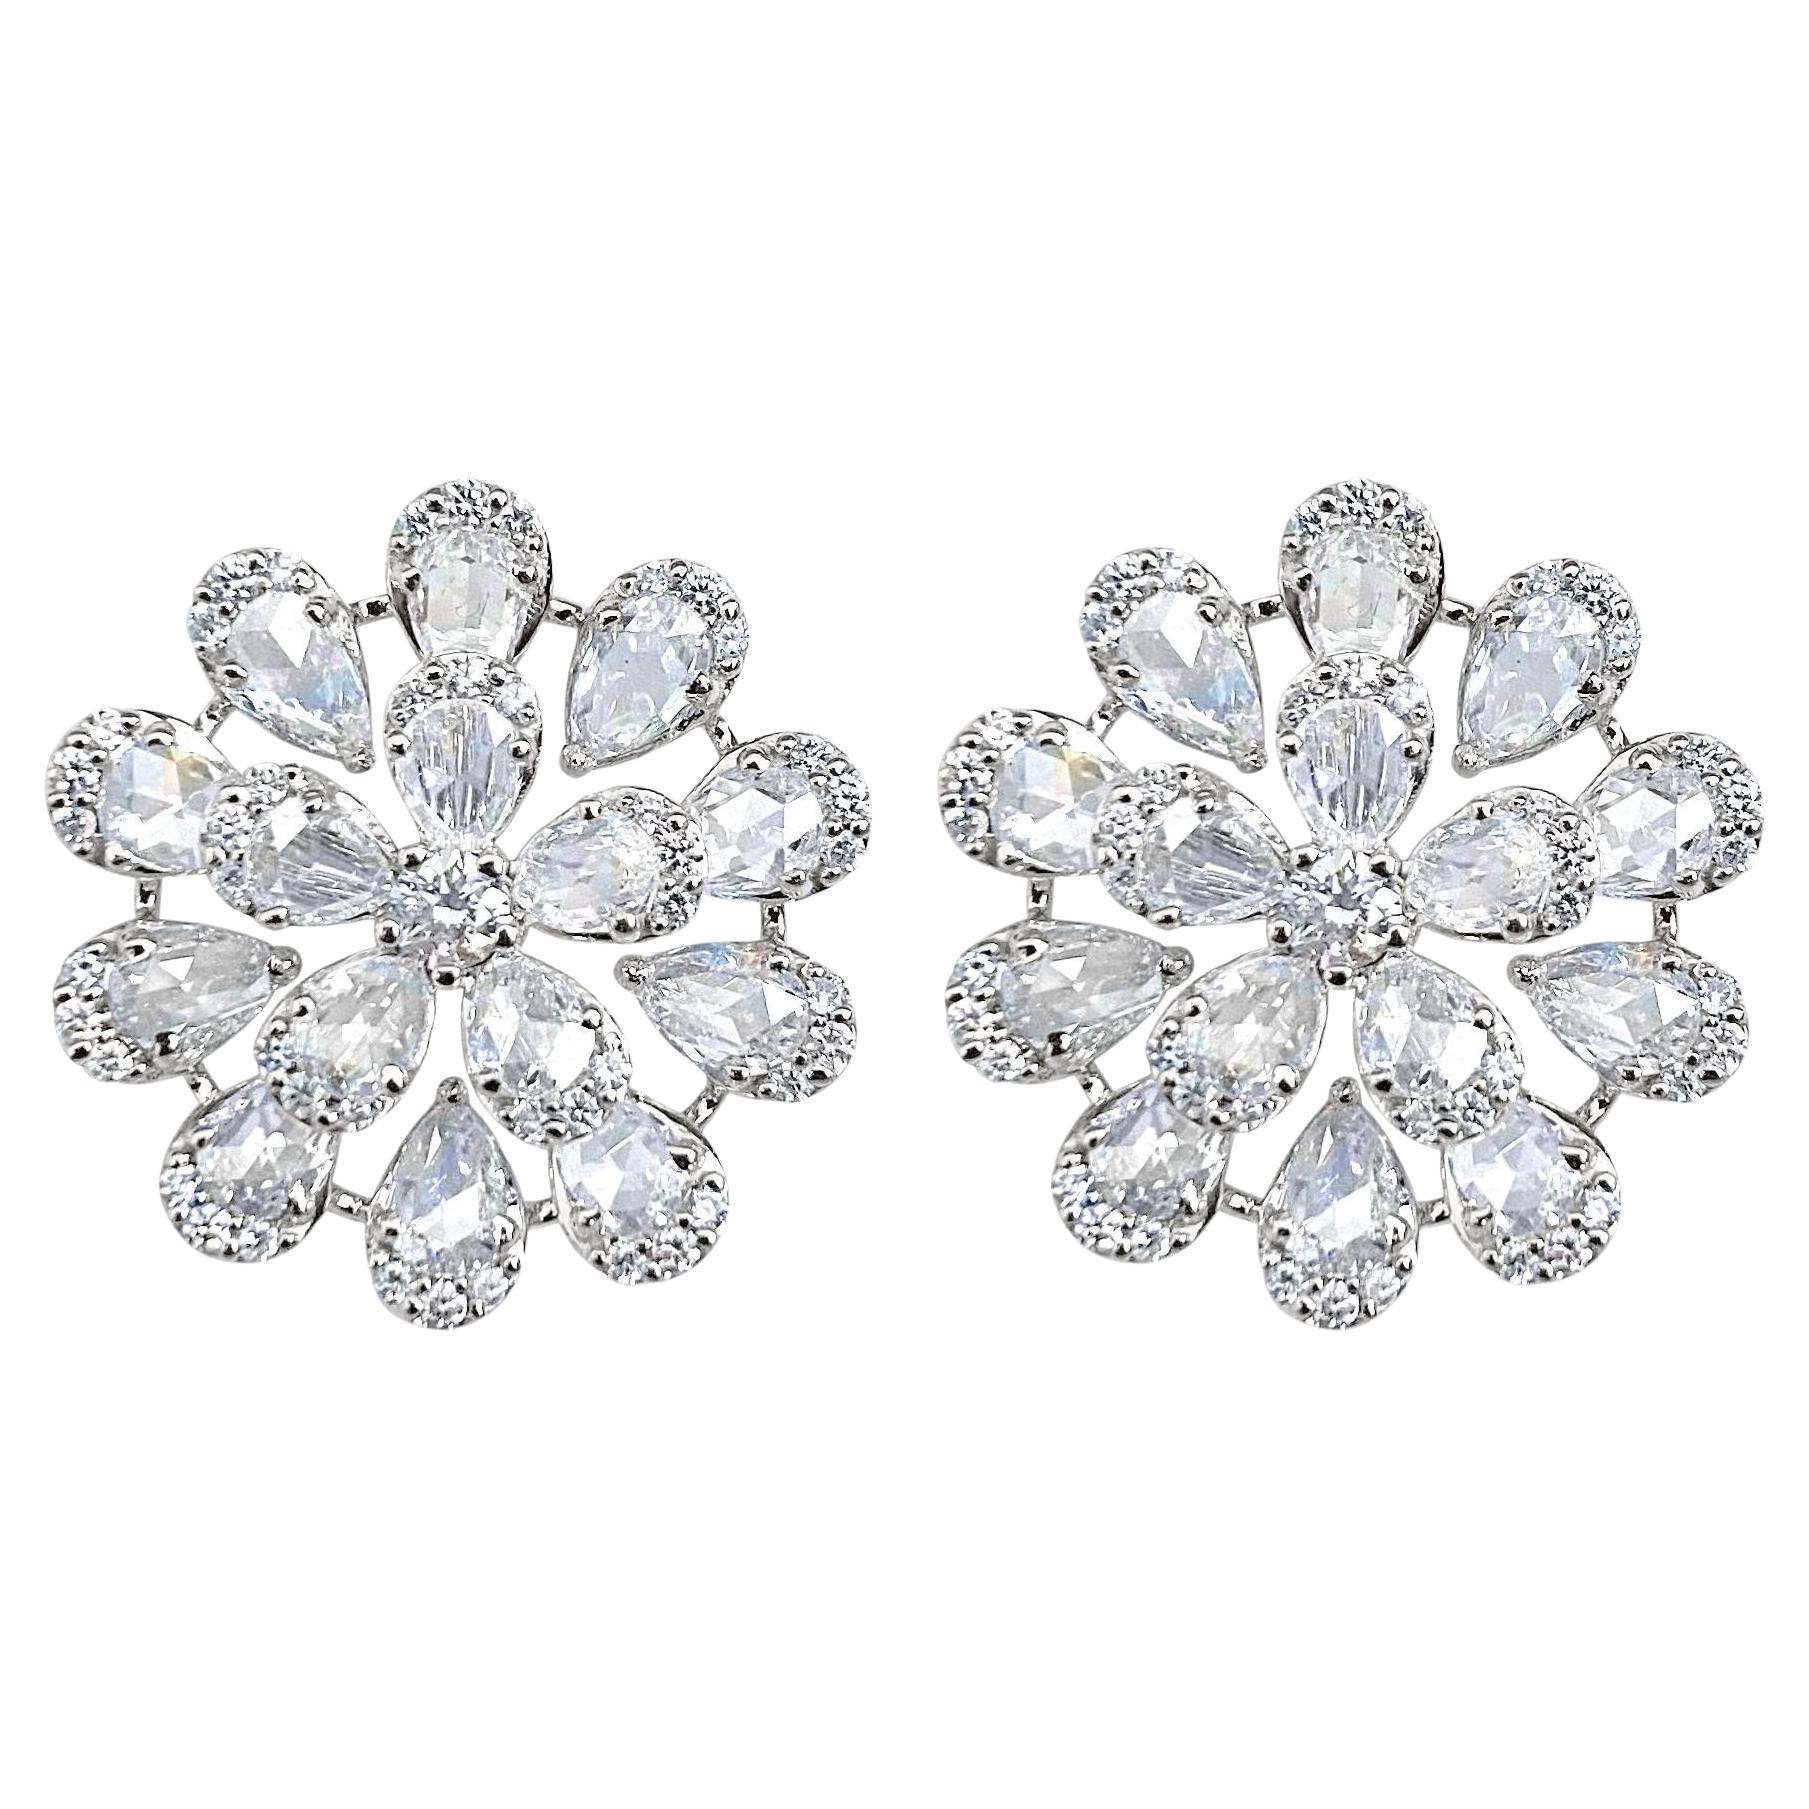 3.72 Carat Rose Cut Diamond 18K White Gold Earrings